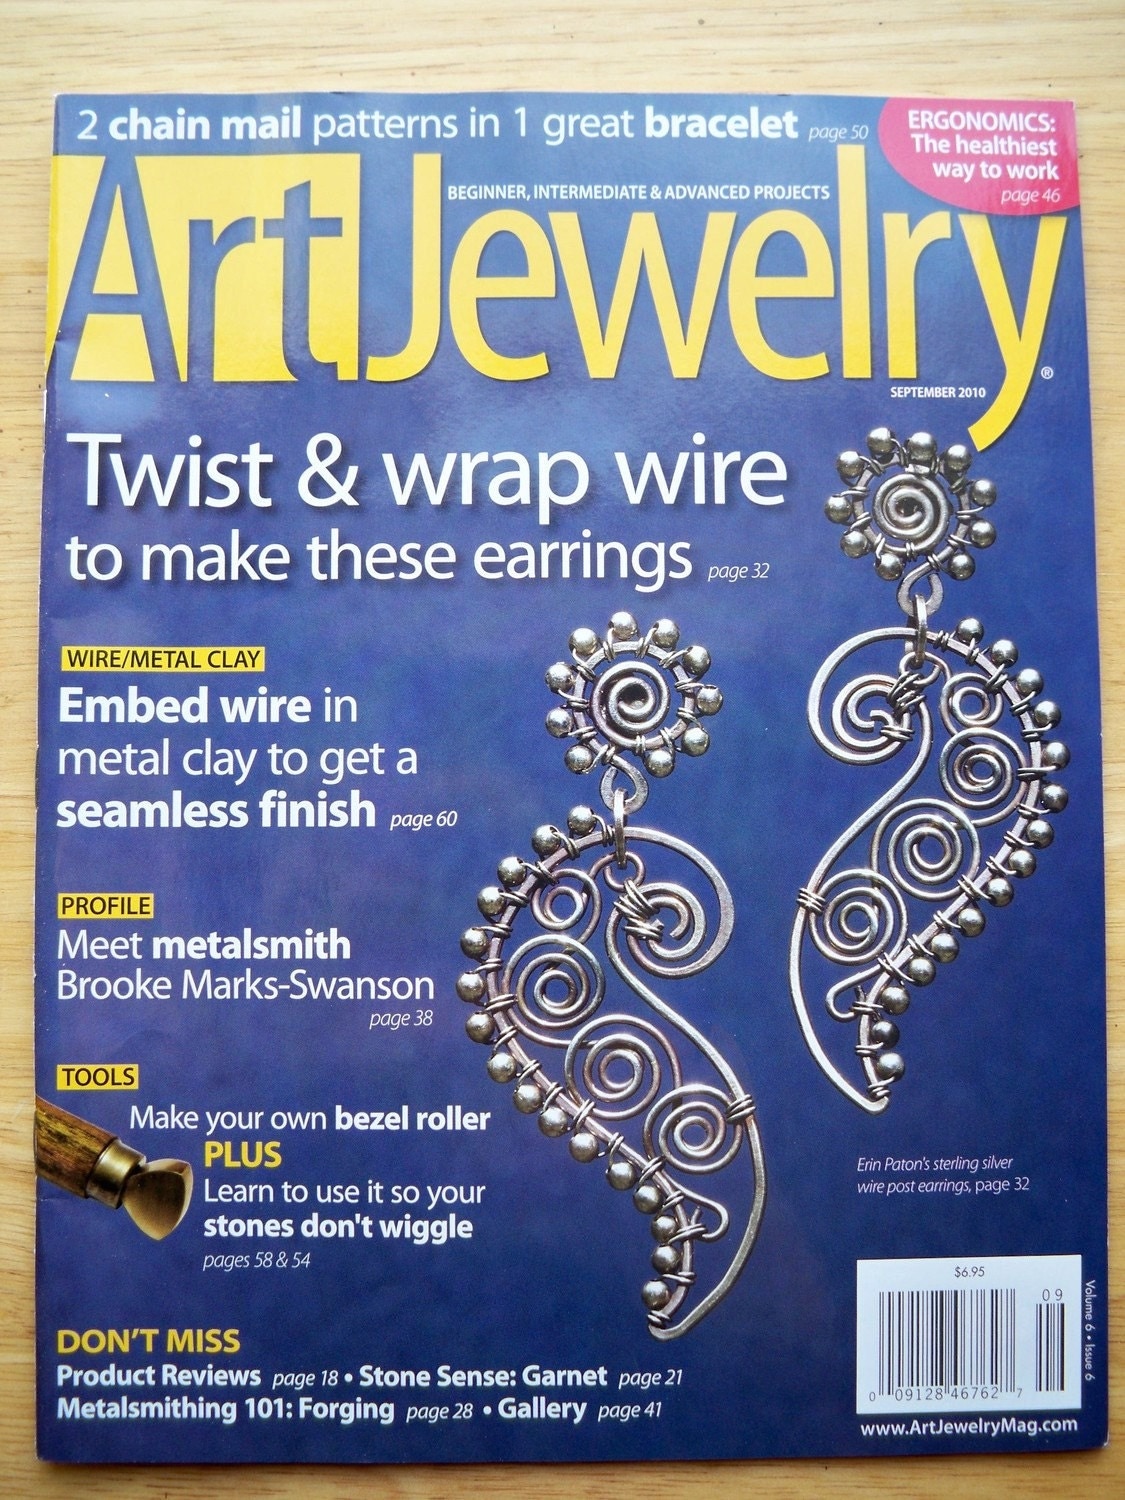 SALE Art Jewelry Magazine September 2010